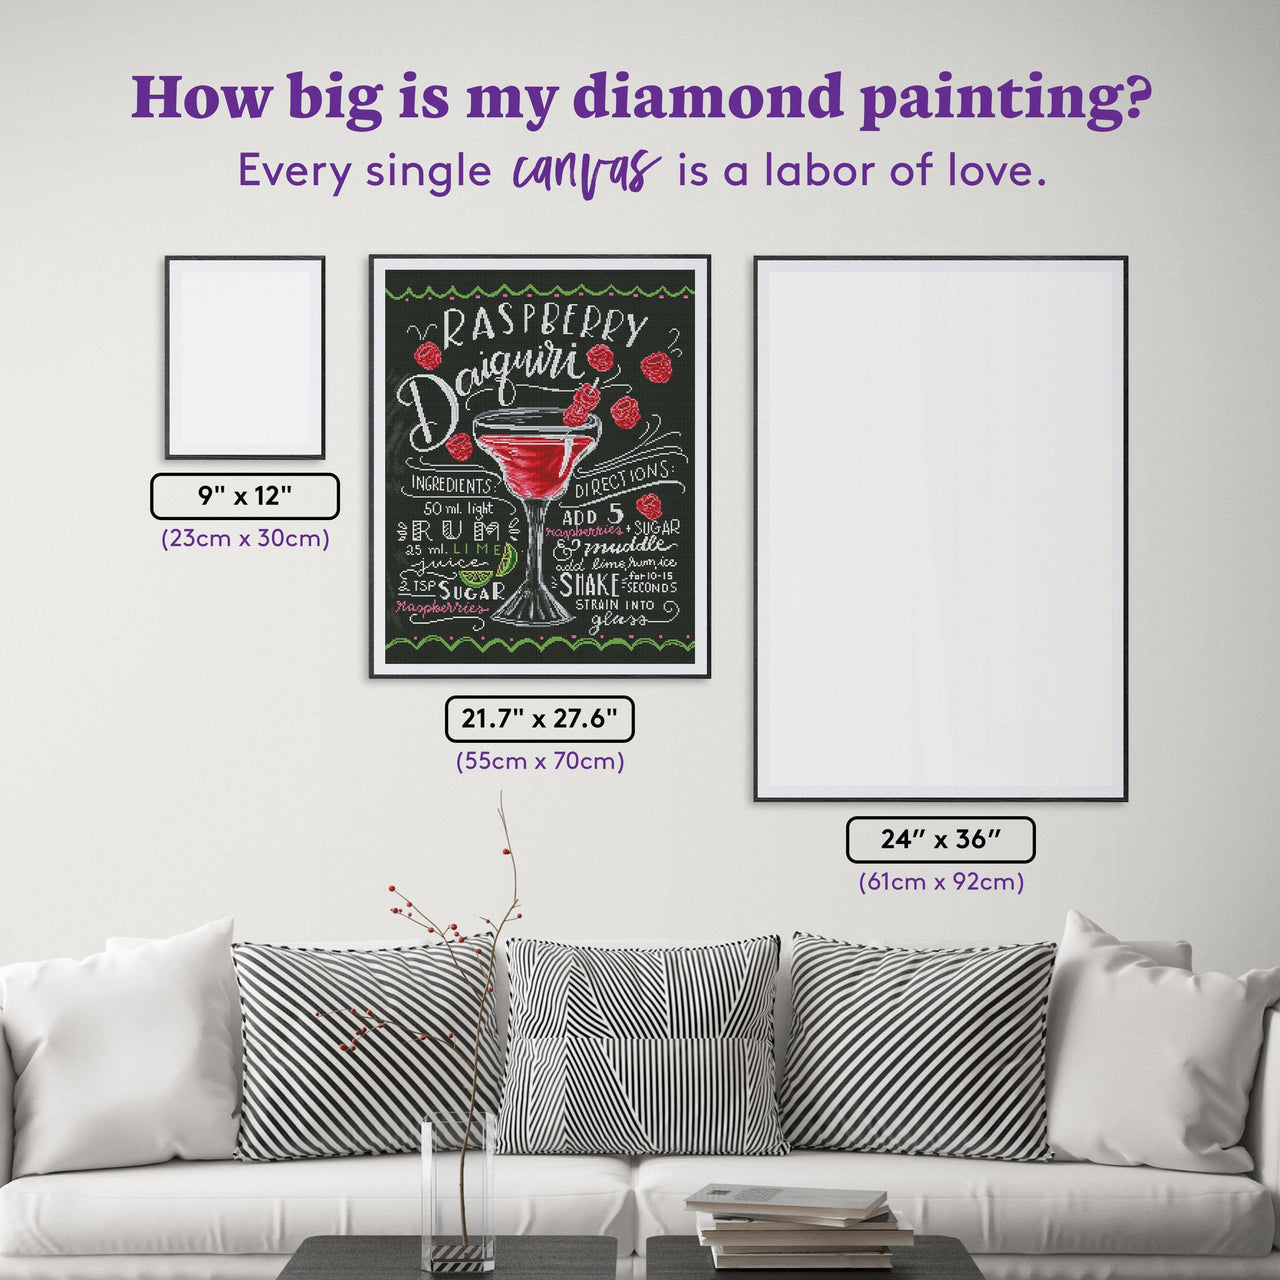 Diamond Painting Raspberry Daiquiri 21.7" x 27.6" (55cm x 70cm) / Square With 21 Colors Including 1 AB / 59,400